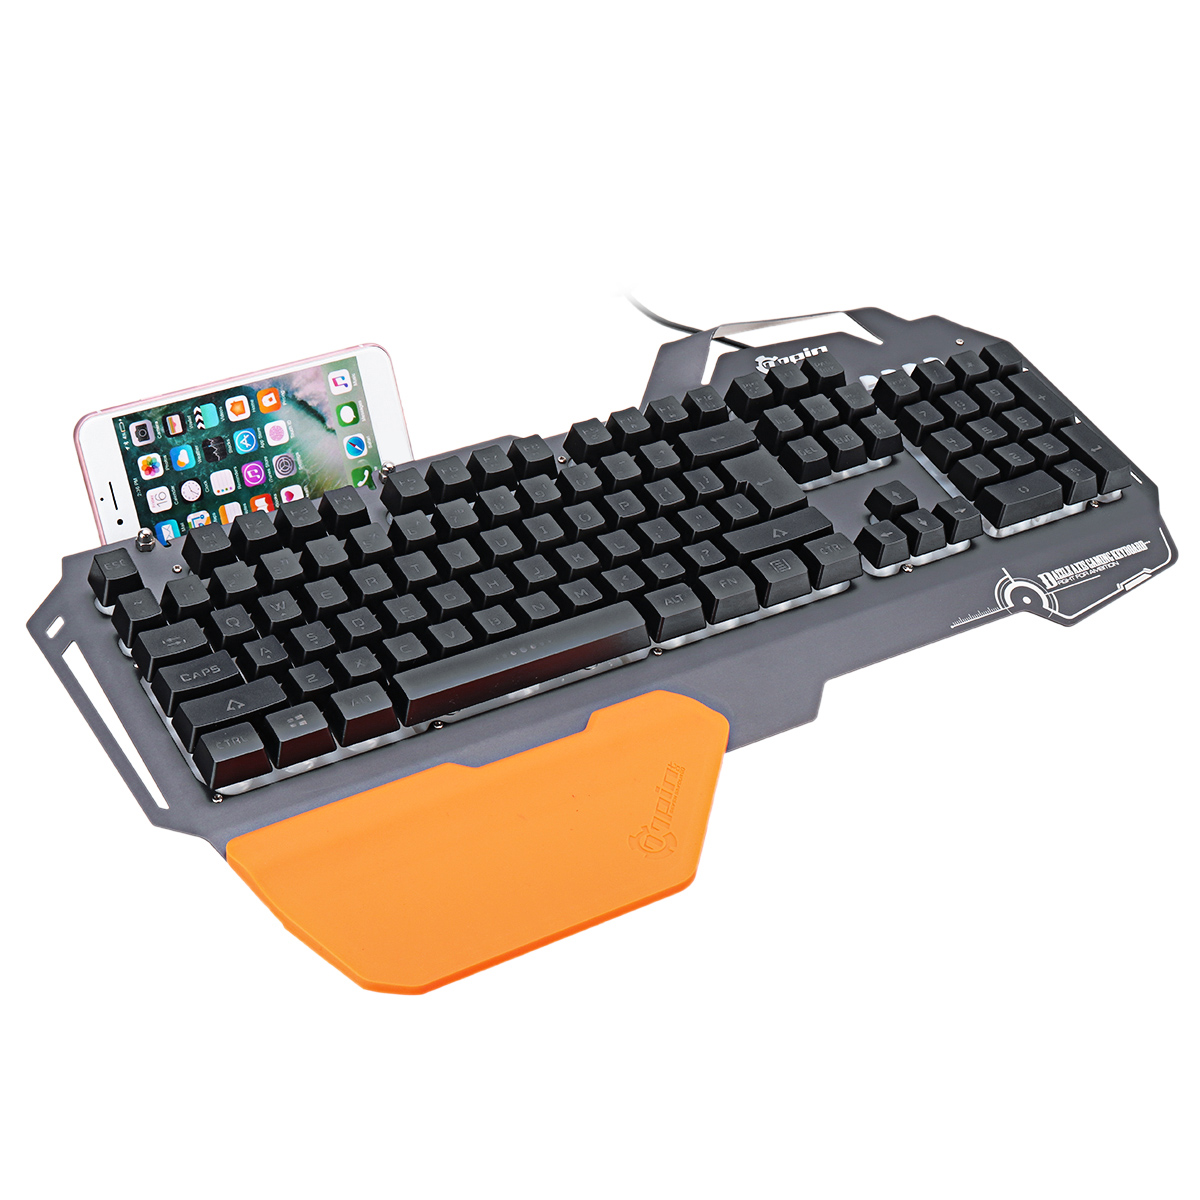 

PK-820 104 Keys USB Wired Backlit Mechanical-Handfeel Gaming Keyboard